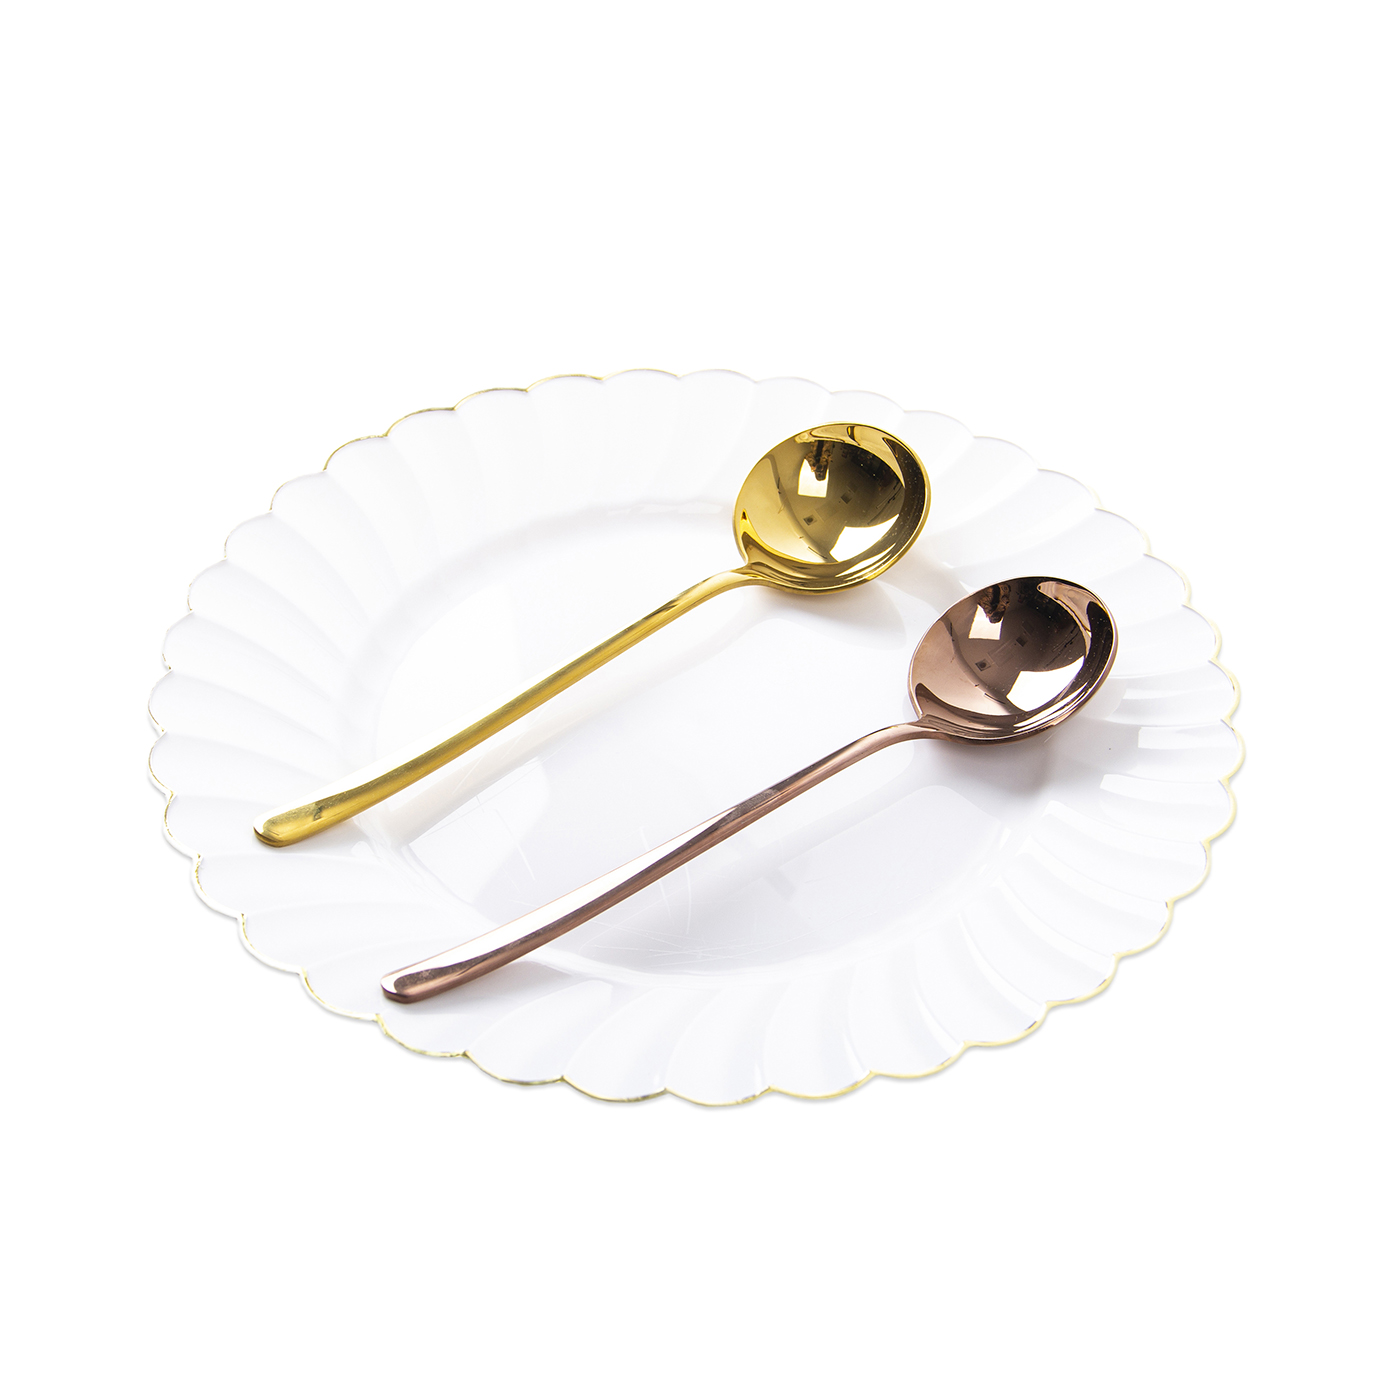 Stainless Steel Golden Round Spoon